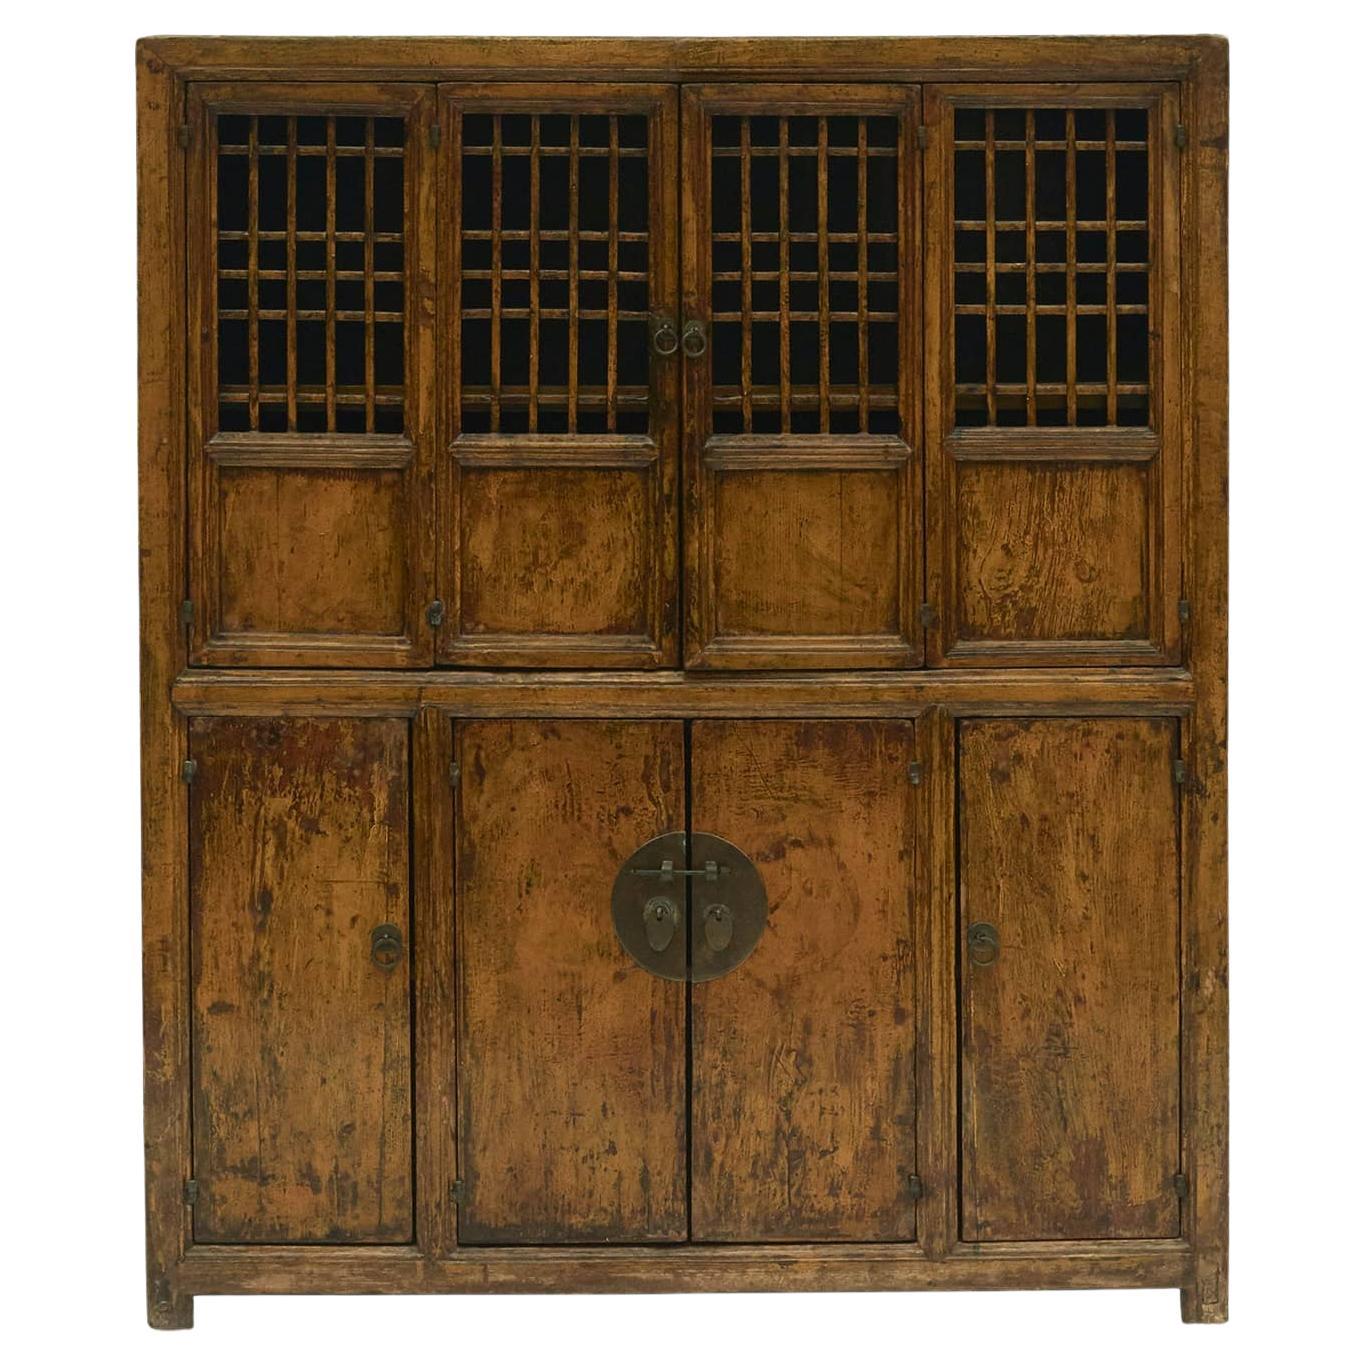 Cabinet in Original Dark Yellow Lacquer, Shandong, China, 1850 -1870